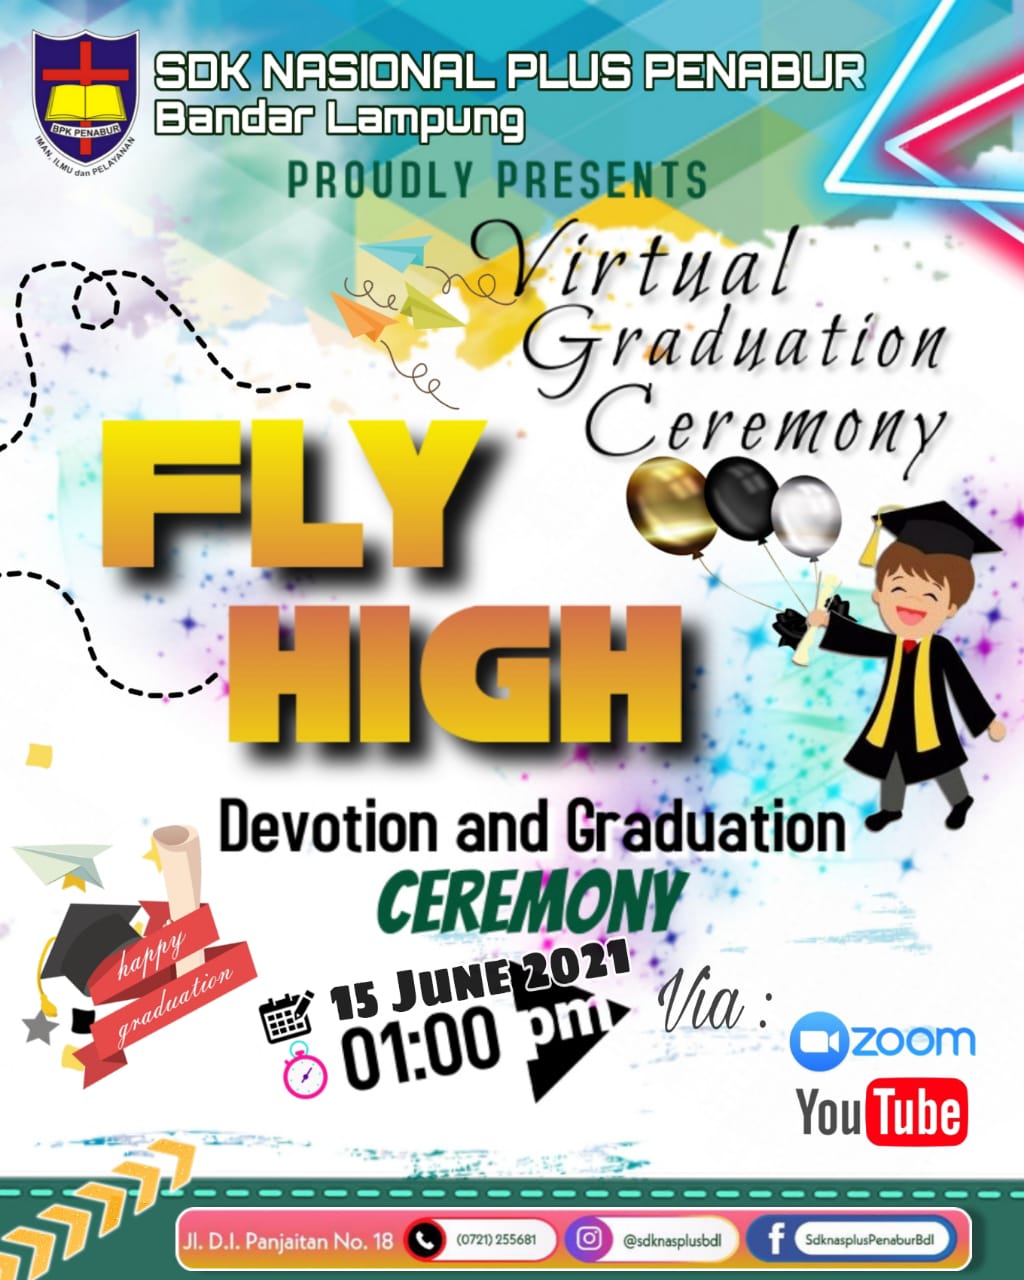 Virtual Graduation Ceremony SDK NASIONAL PLUS PENABUR Bandar Lampung